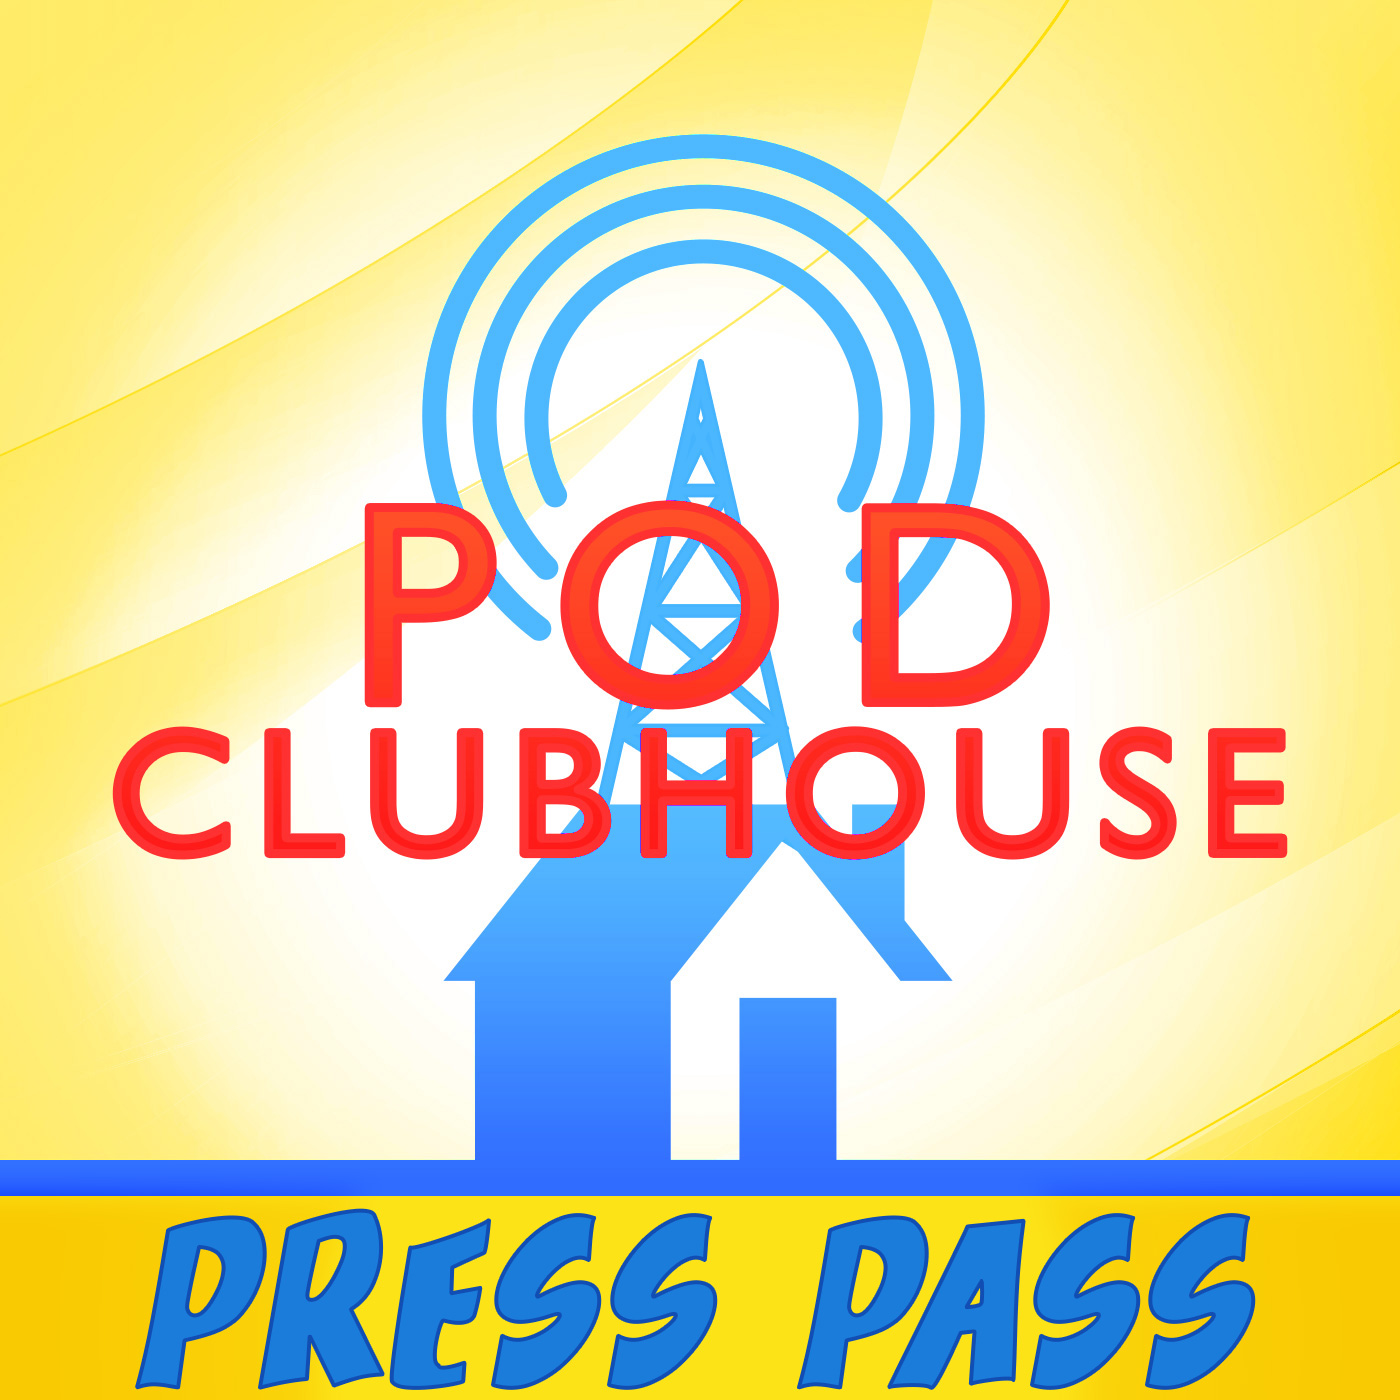 Pod Clubhouse Press Pass